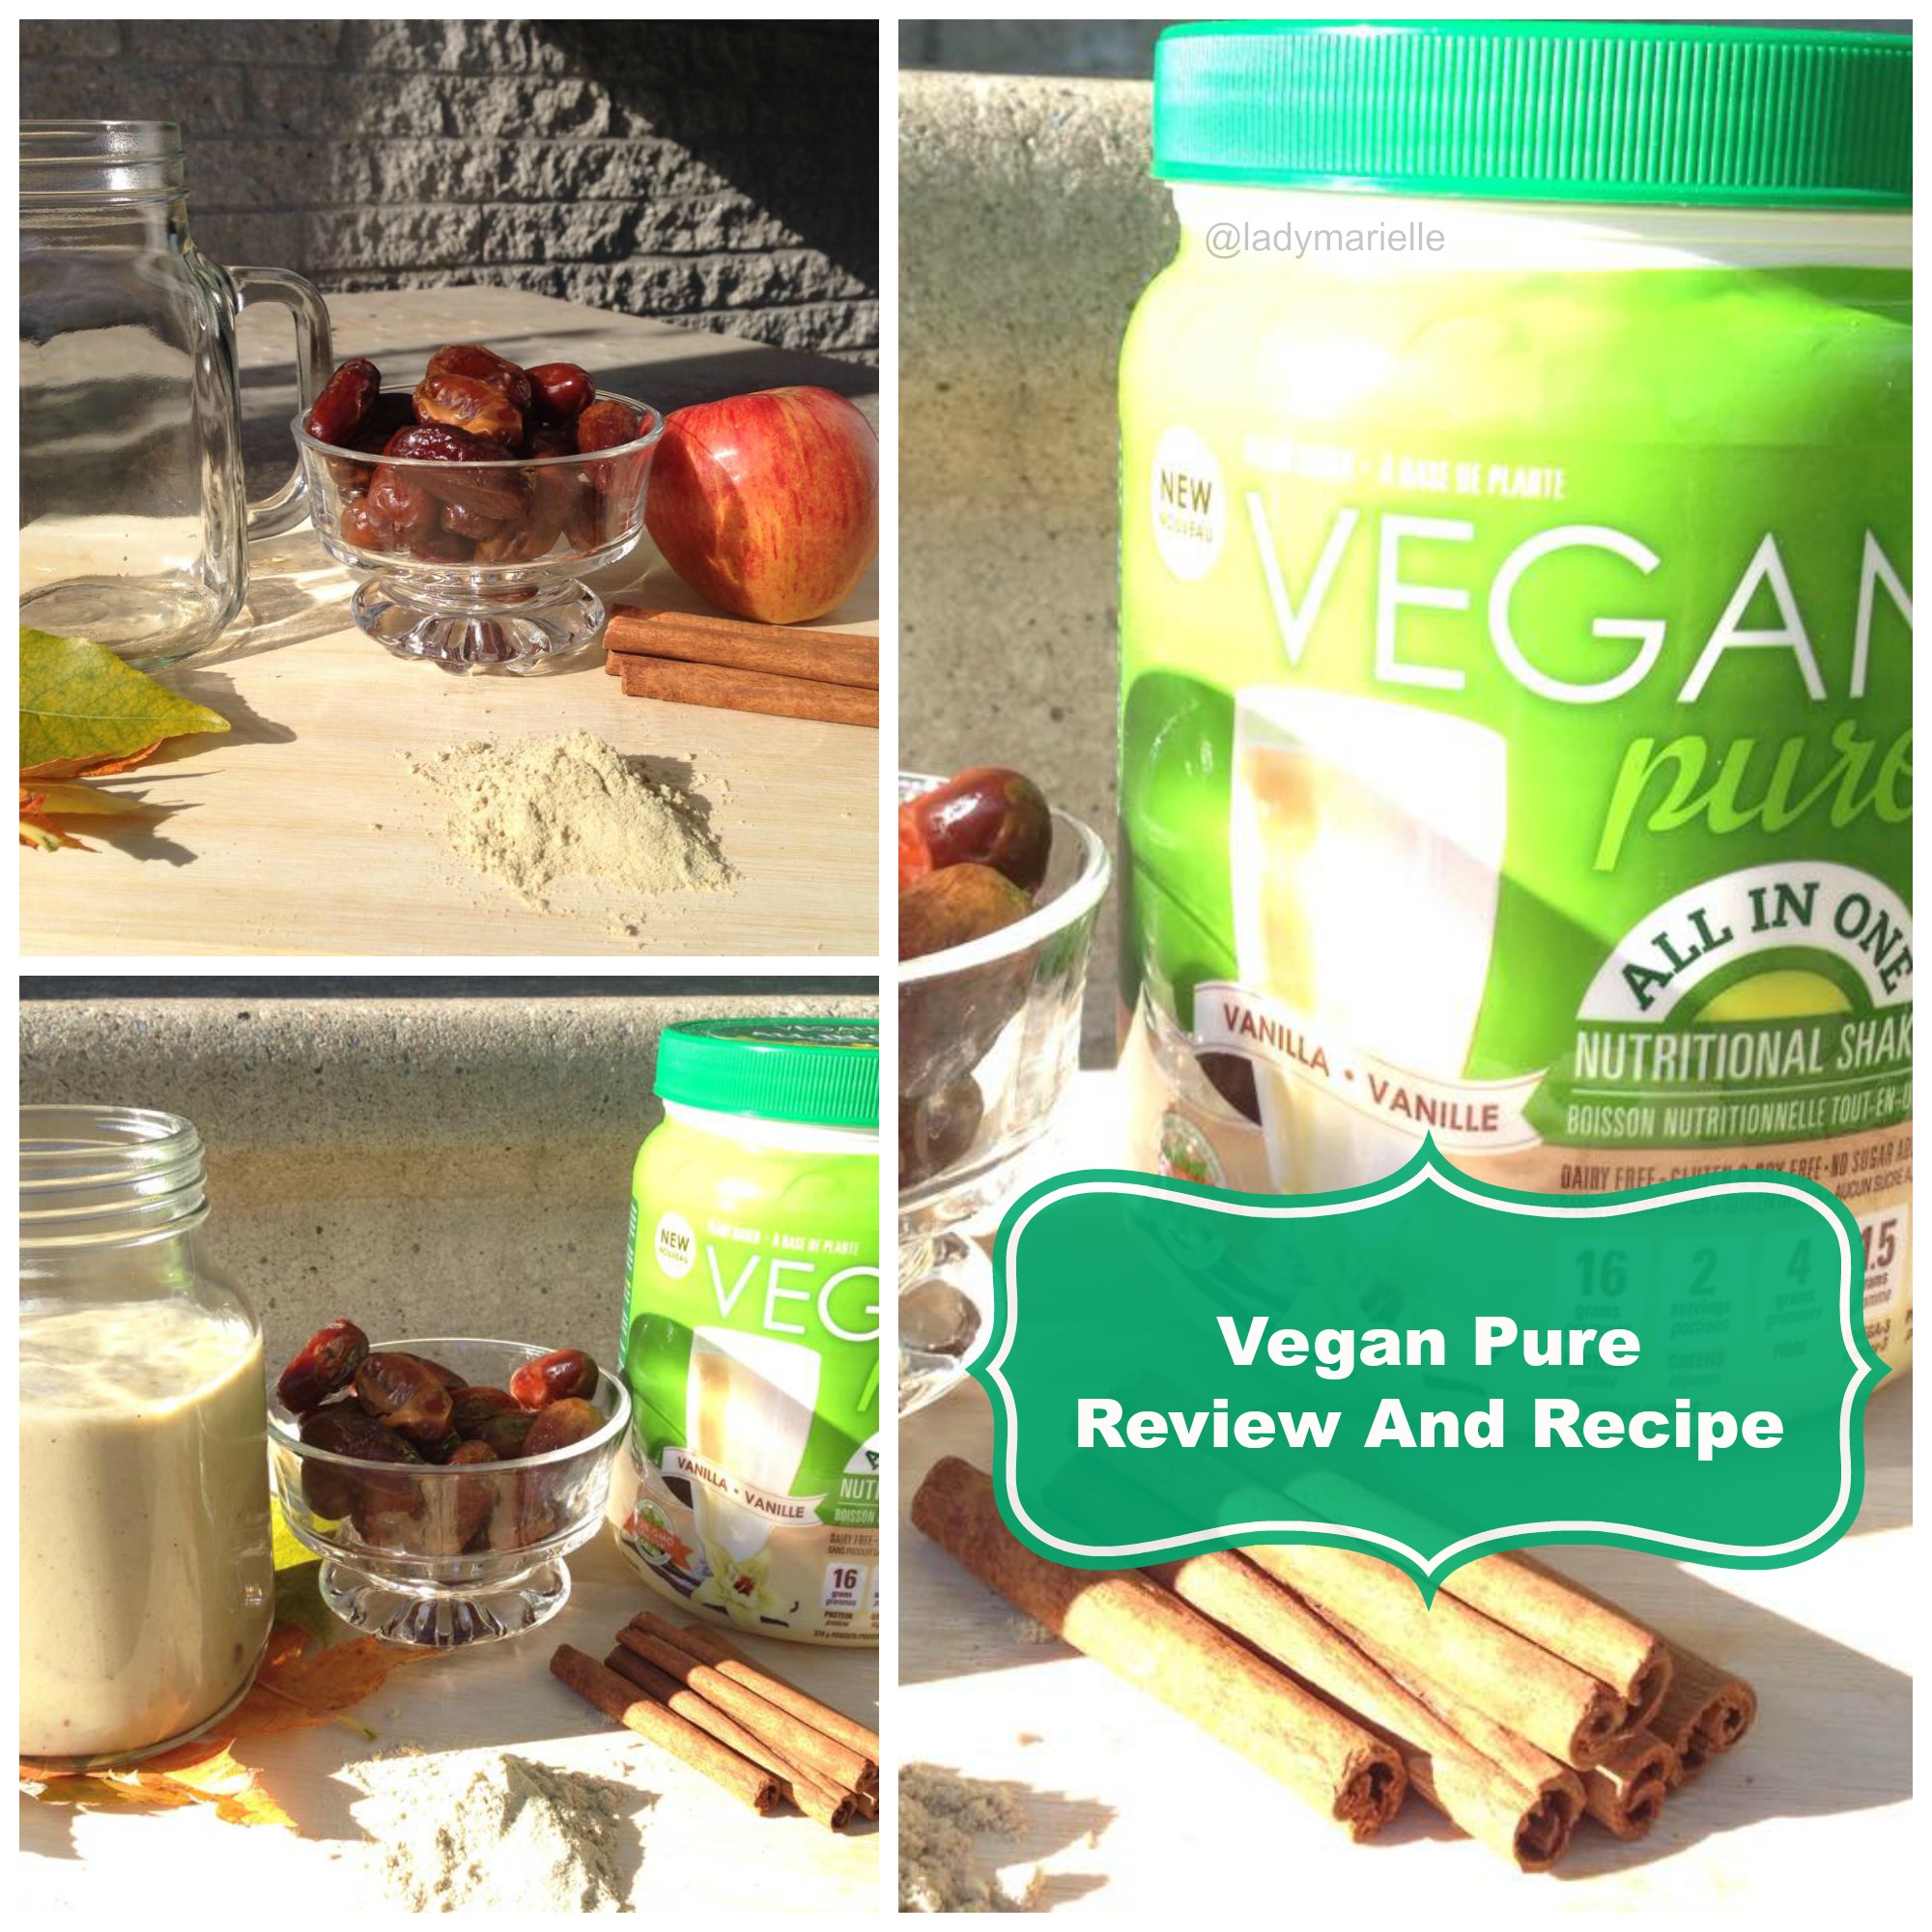 Vegan Pure Review And Recipe